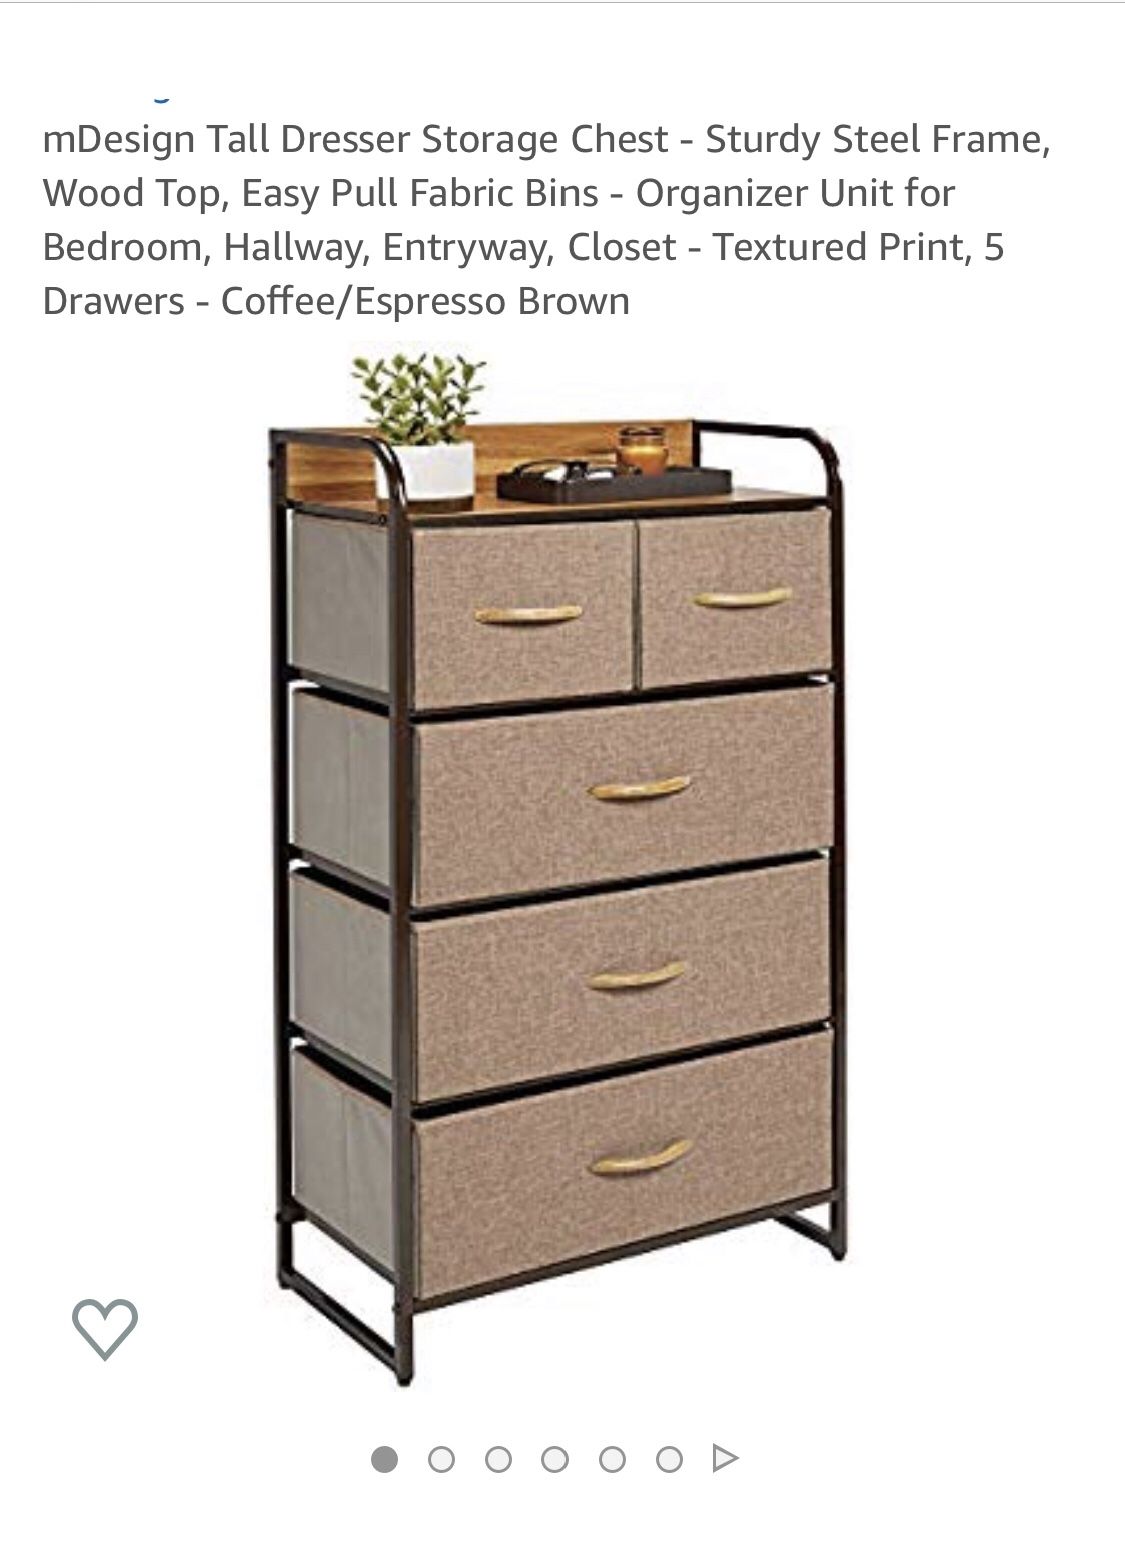 M design tall dresser storage chest, sturdy steel frame, wood top , easy pull fabric bins, organizer unit for bedroom, hallway,entryway, closet,textu